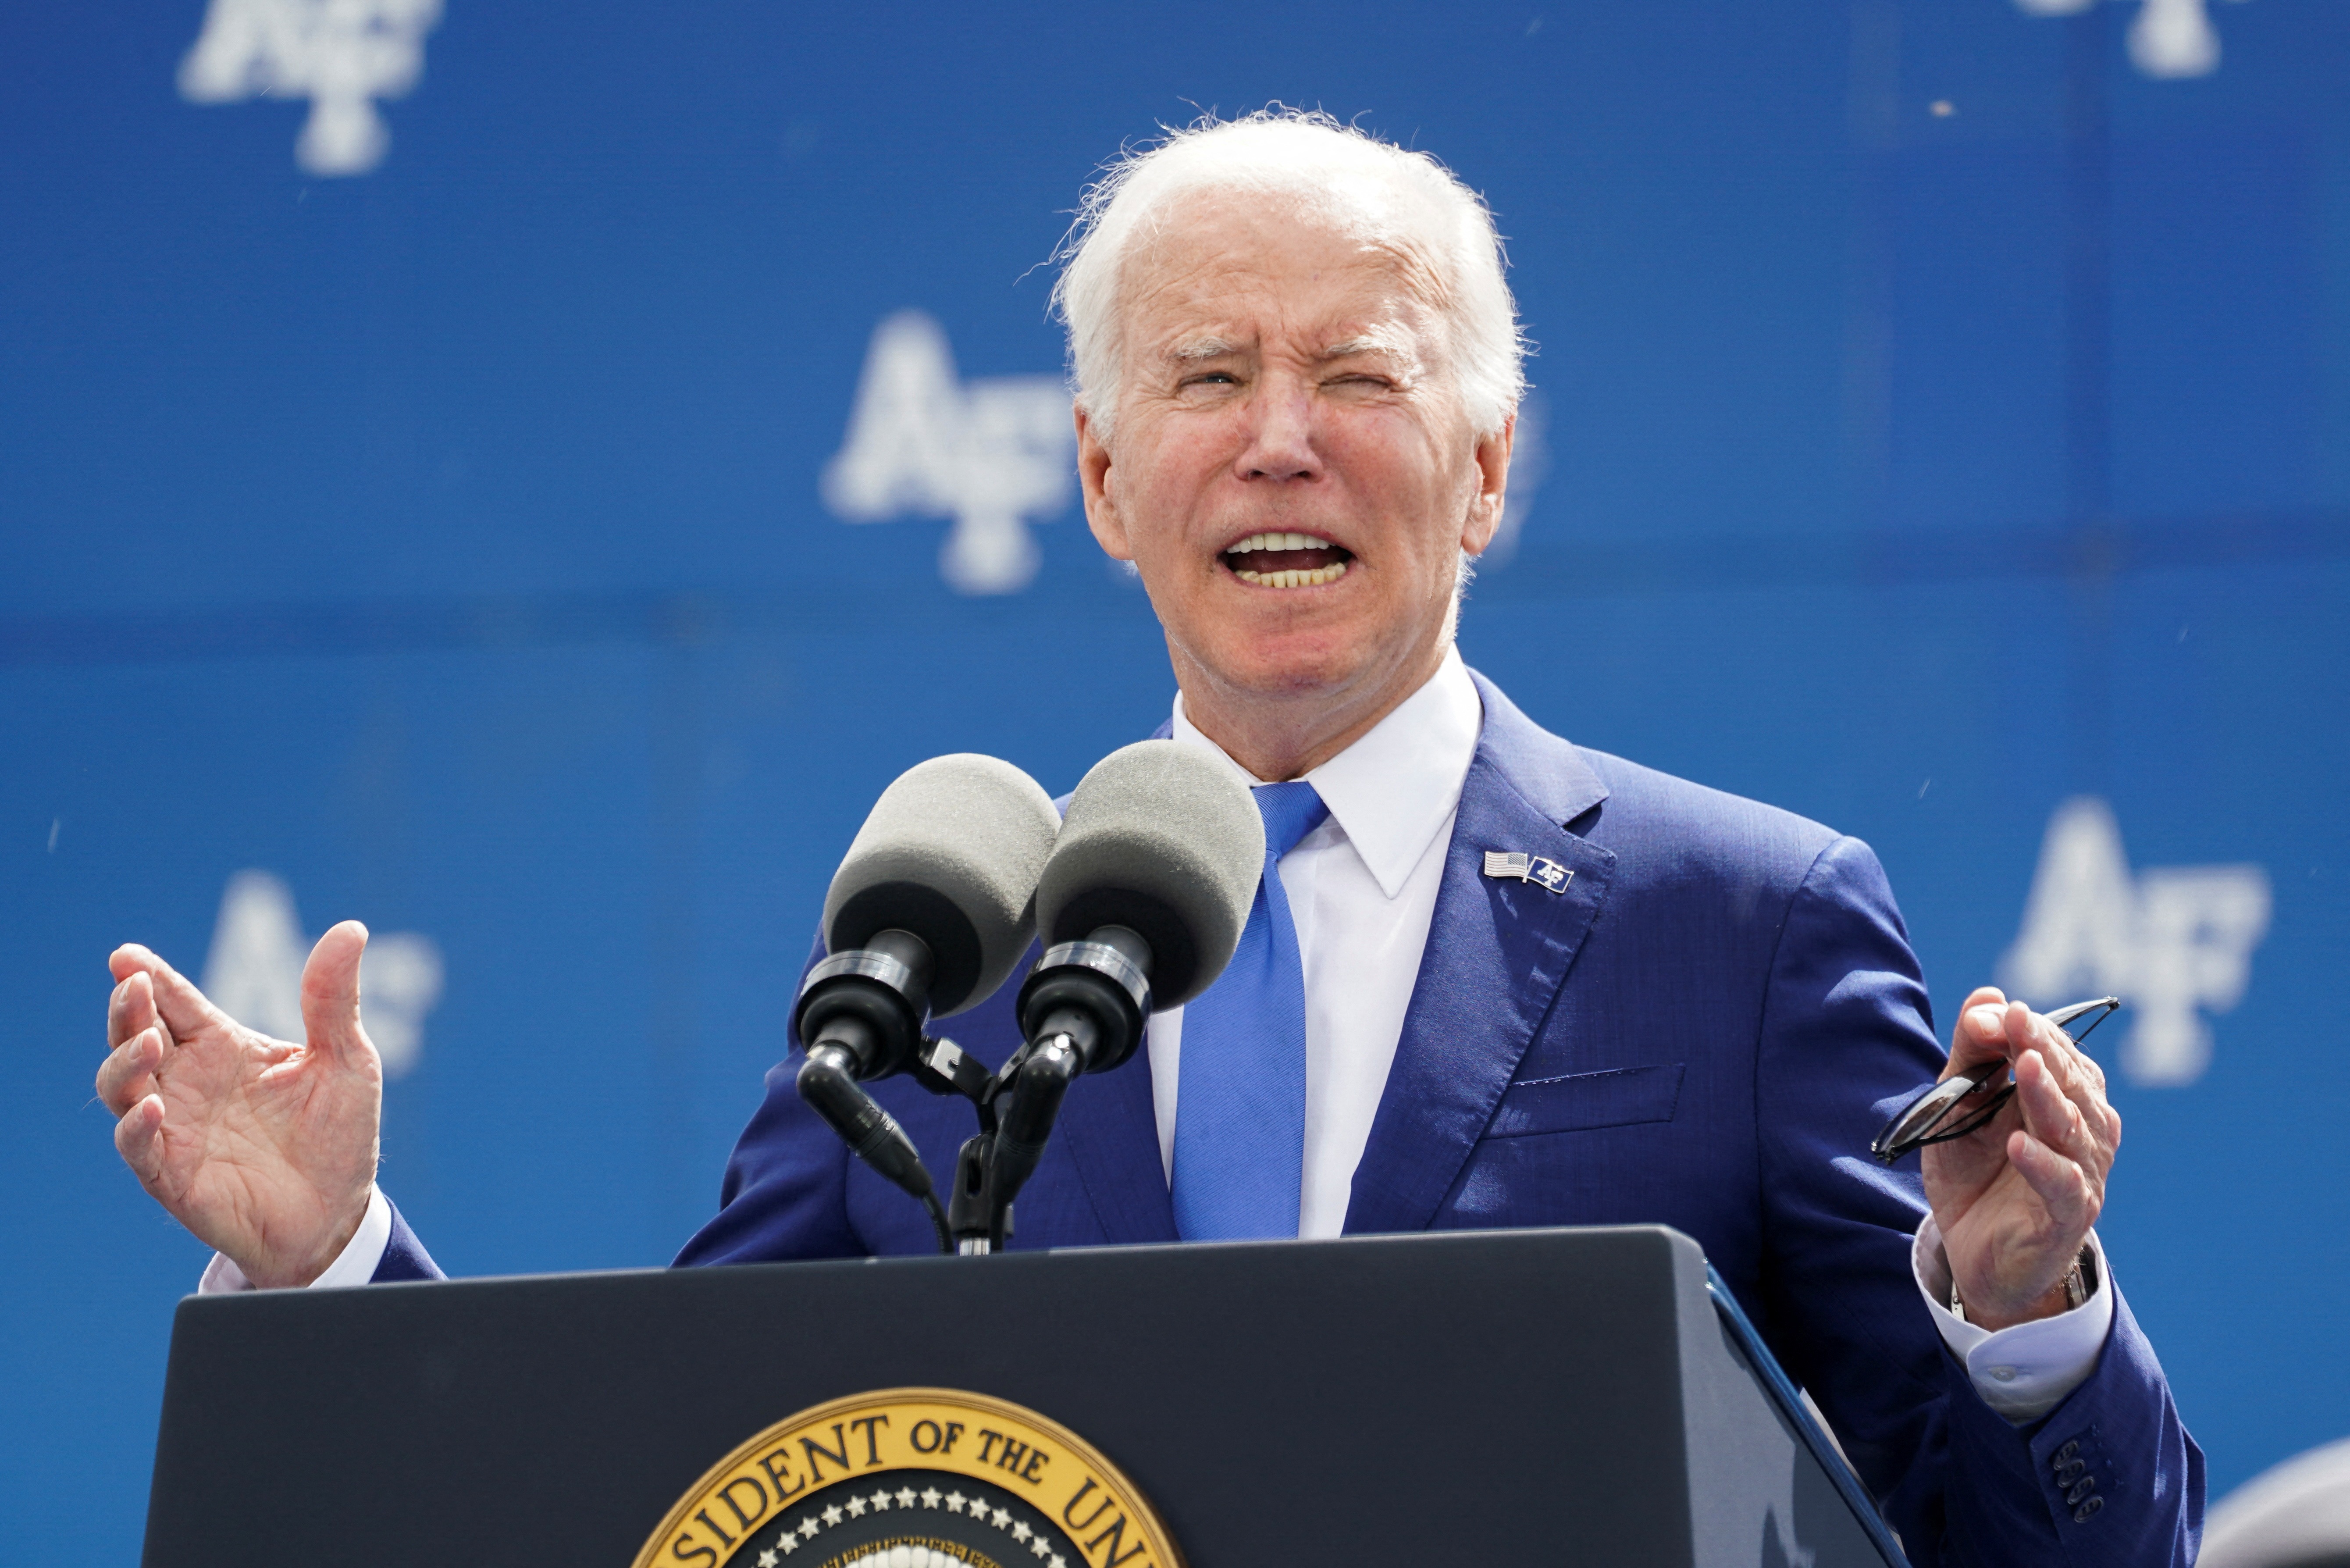 Biden aseguró que para Ucrania no será “fácil” ingresar a la Otan